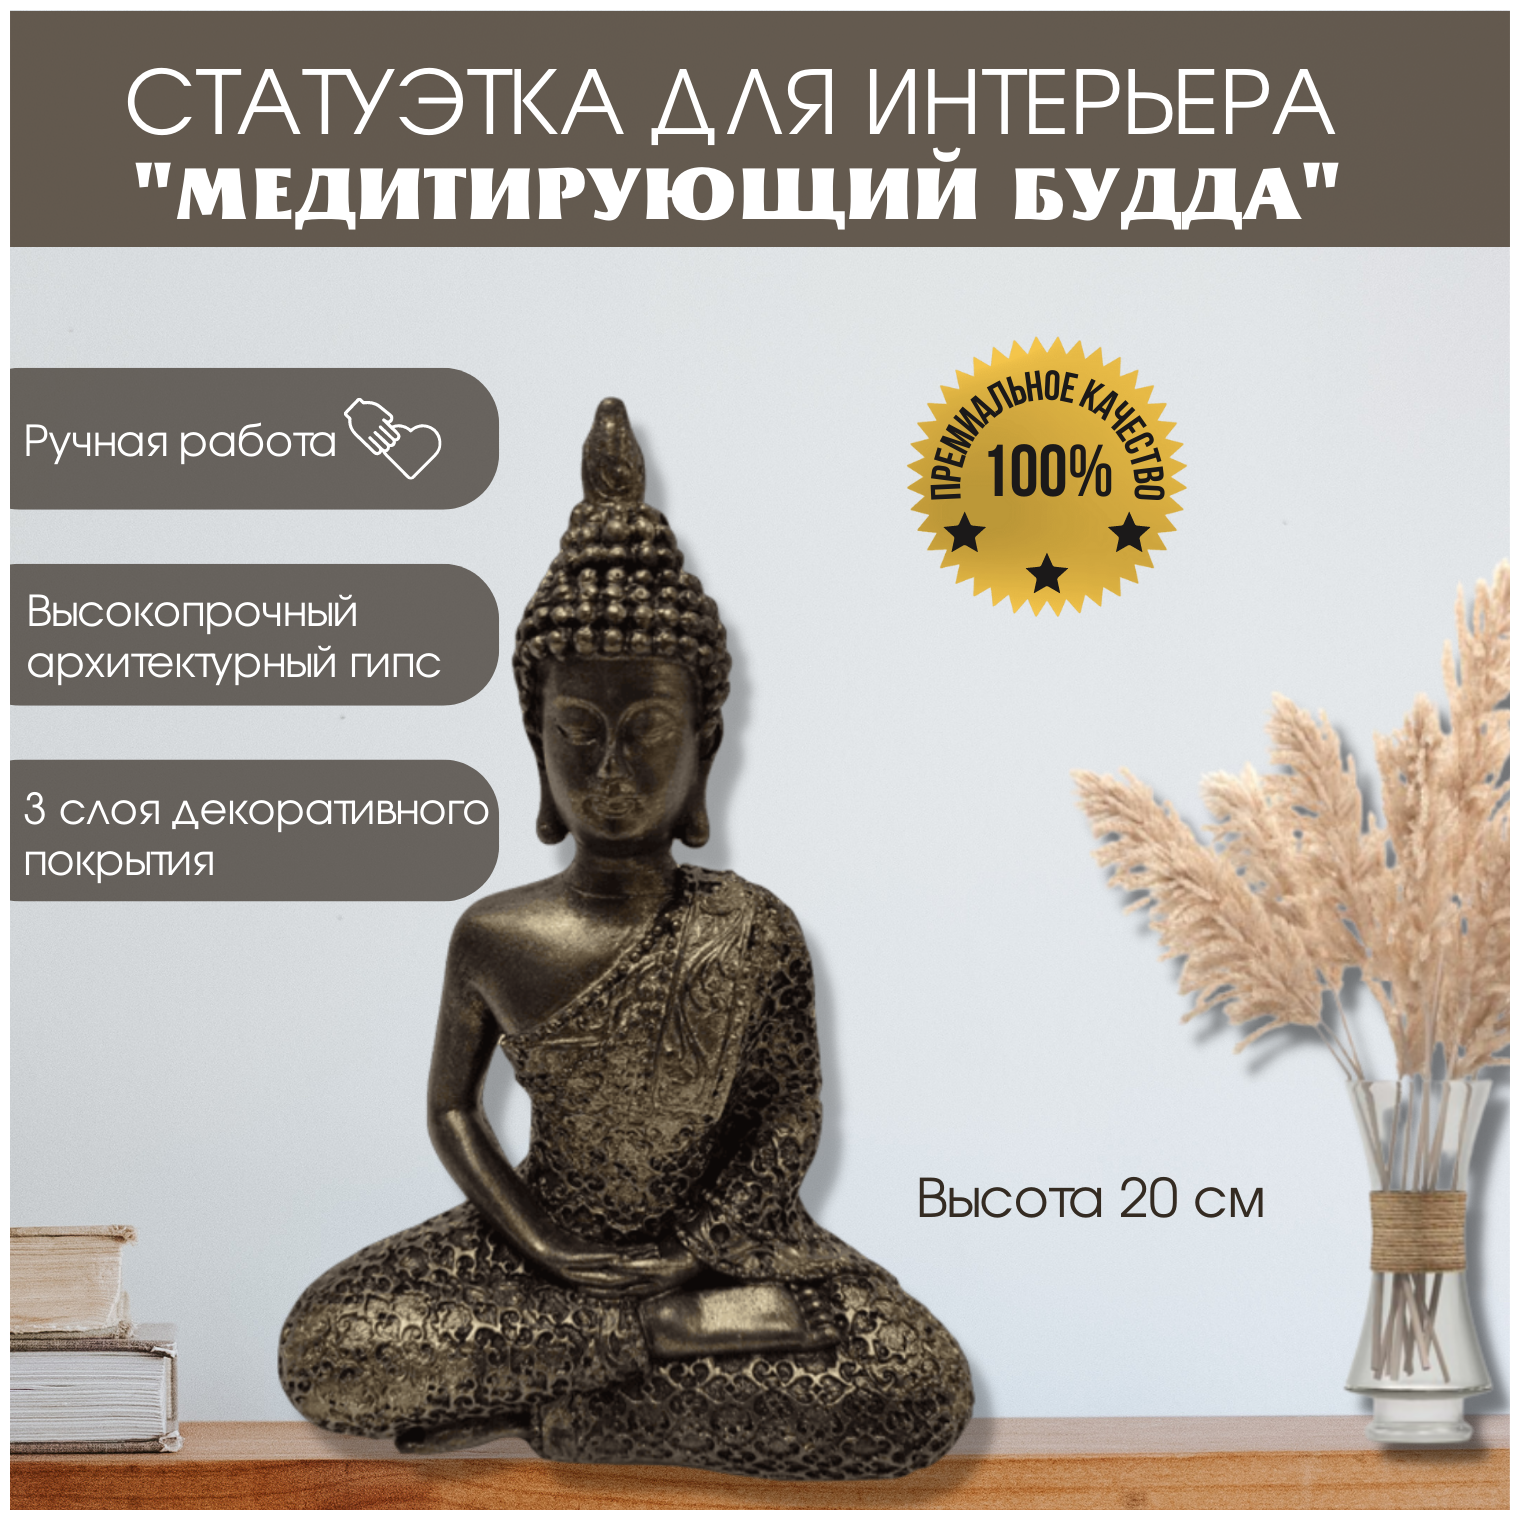 Медитирующий Будда "Черное Золото" статуэтка для чайных церемоний